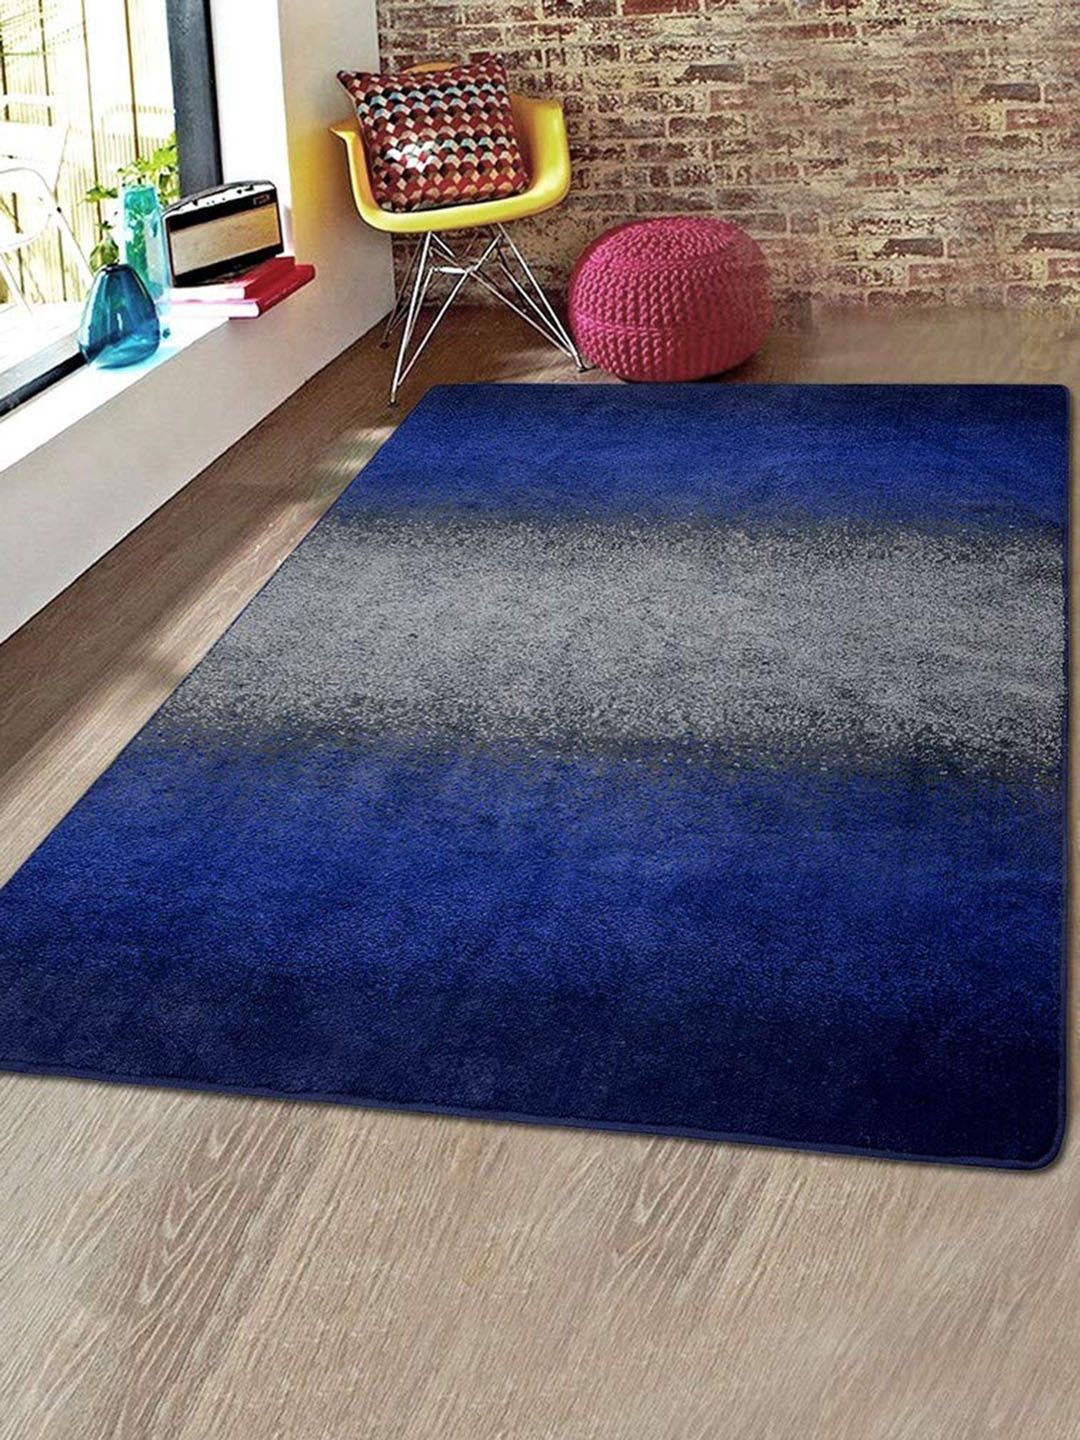 Saral Home Blue & Grey Aeon Design Microfiber Anti-Skid Carpet Price in India